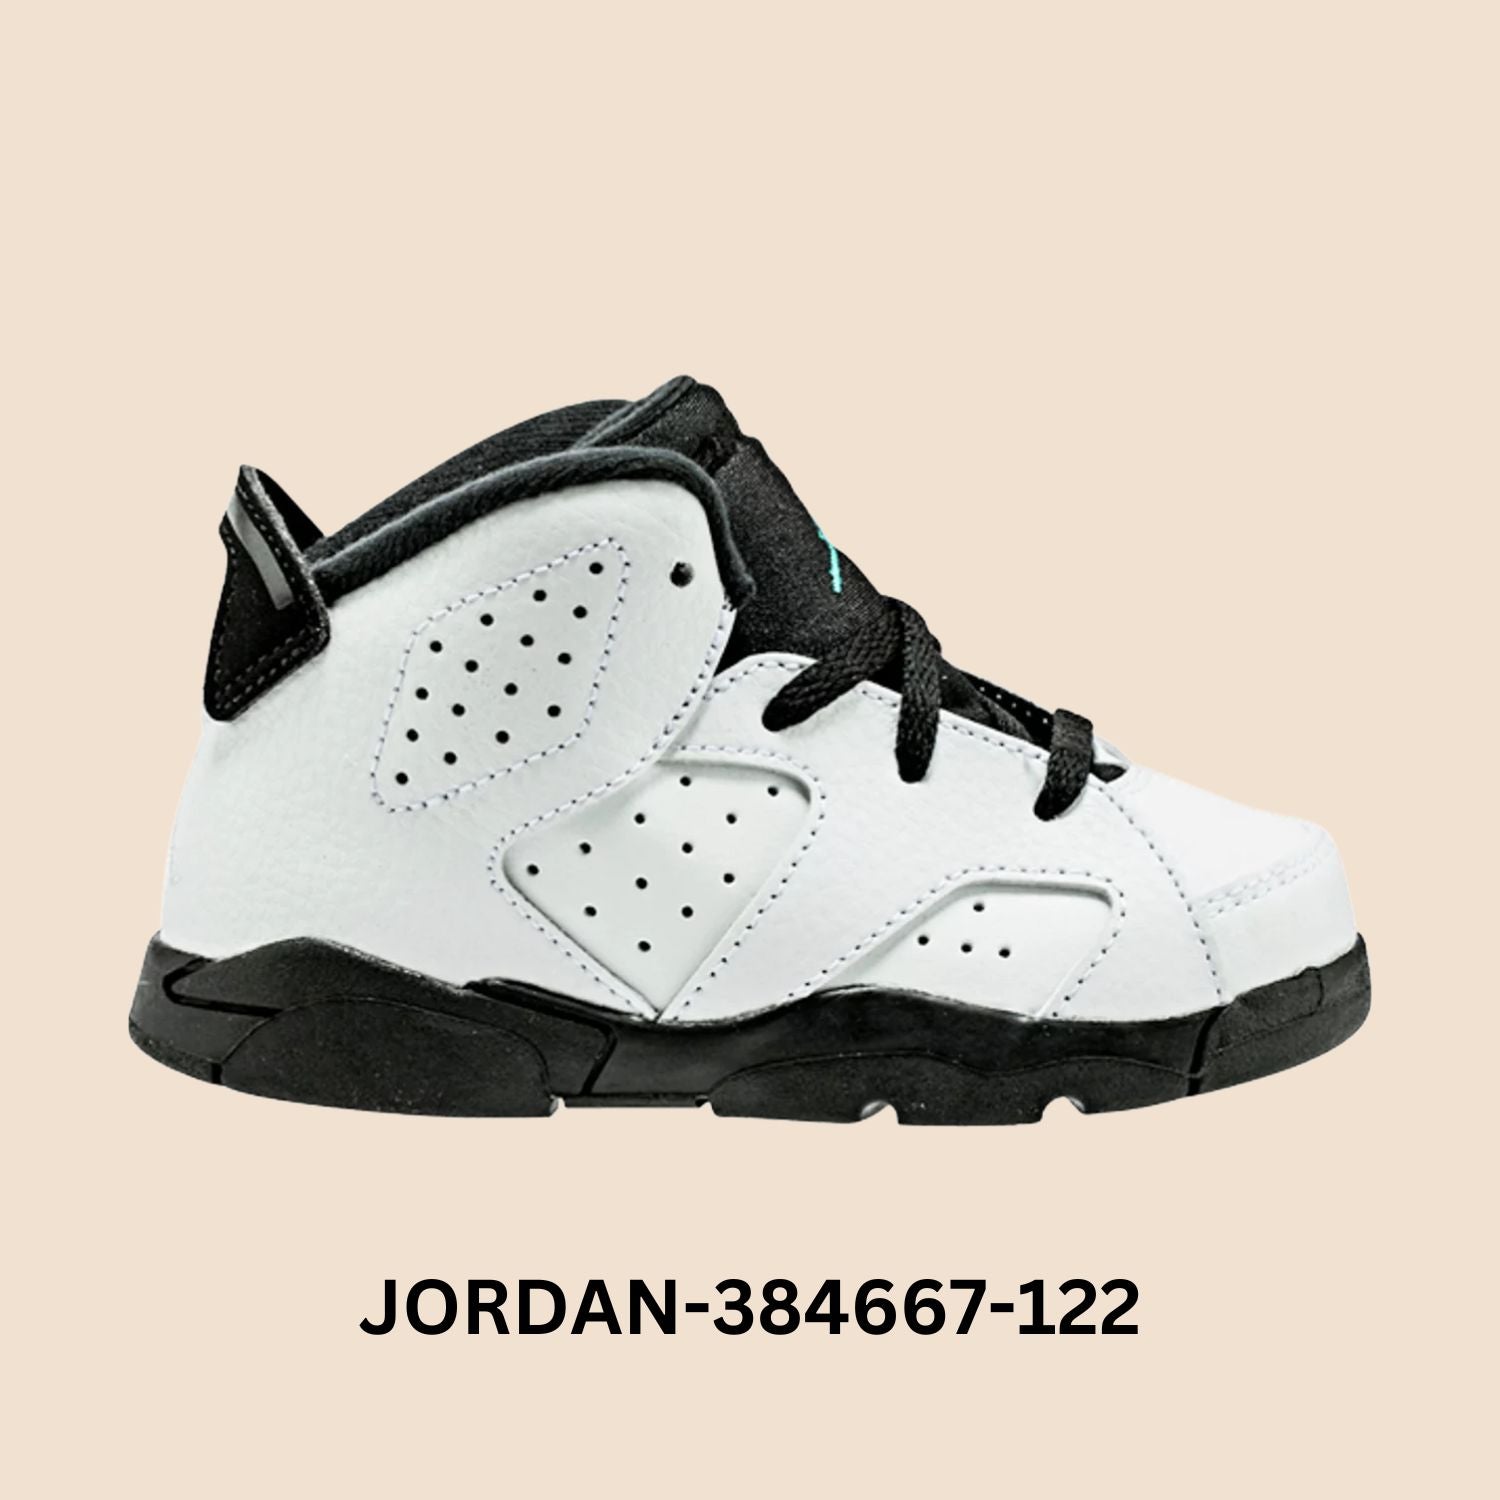 Air Jordan 6 Retro BT "Hyper Jade" Toddlers Style# 384667-122